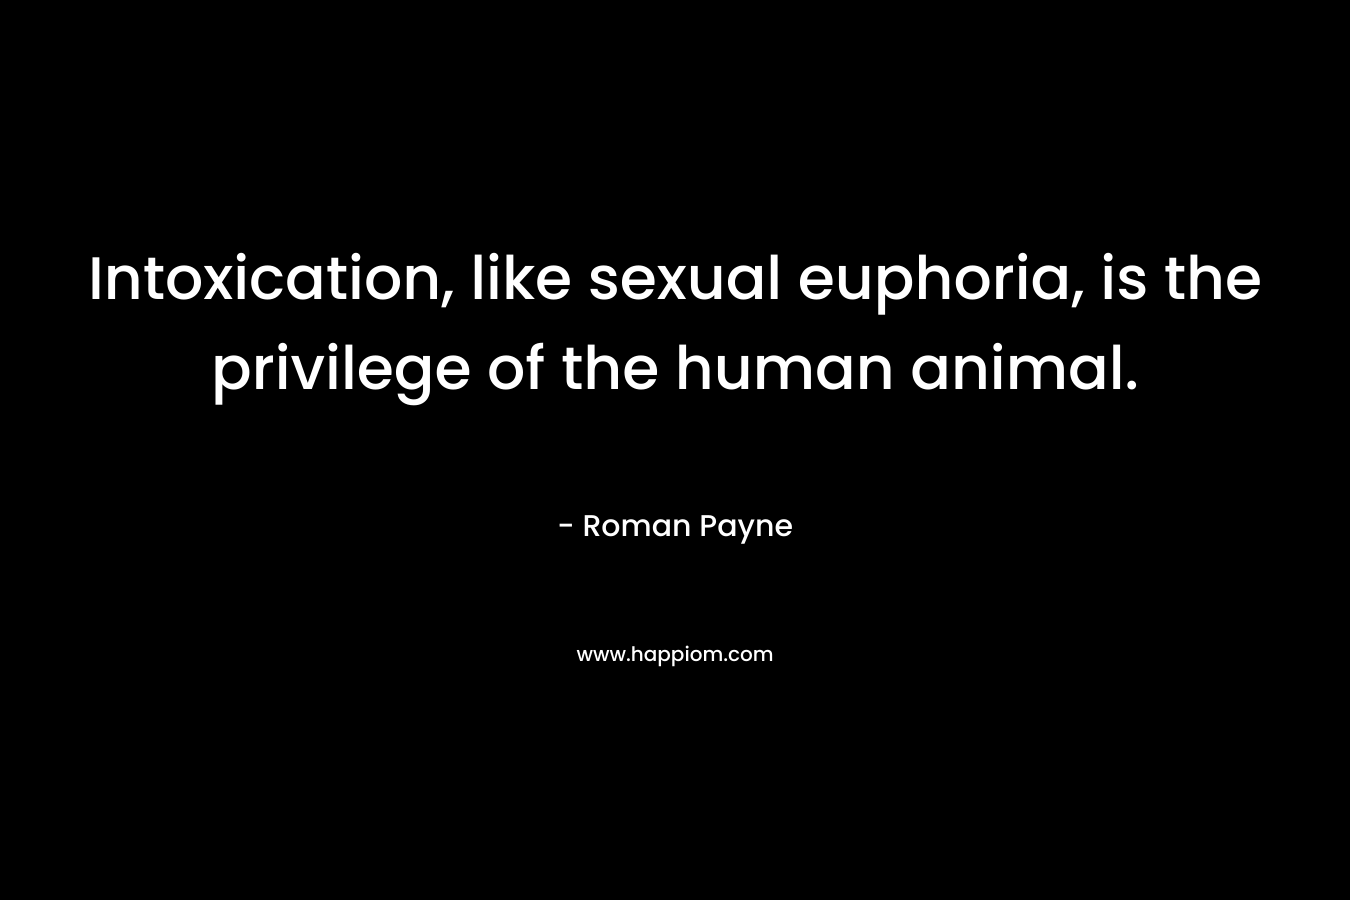 Intoxication, like sexual euphoria, is the privilege of the human animal. – Roman Payne